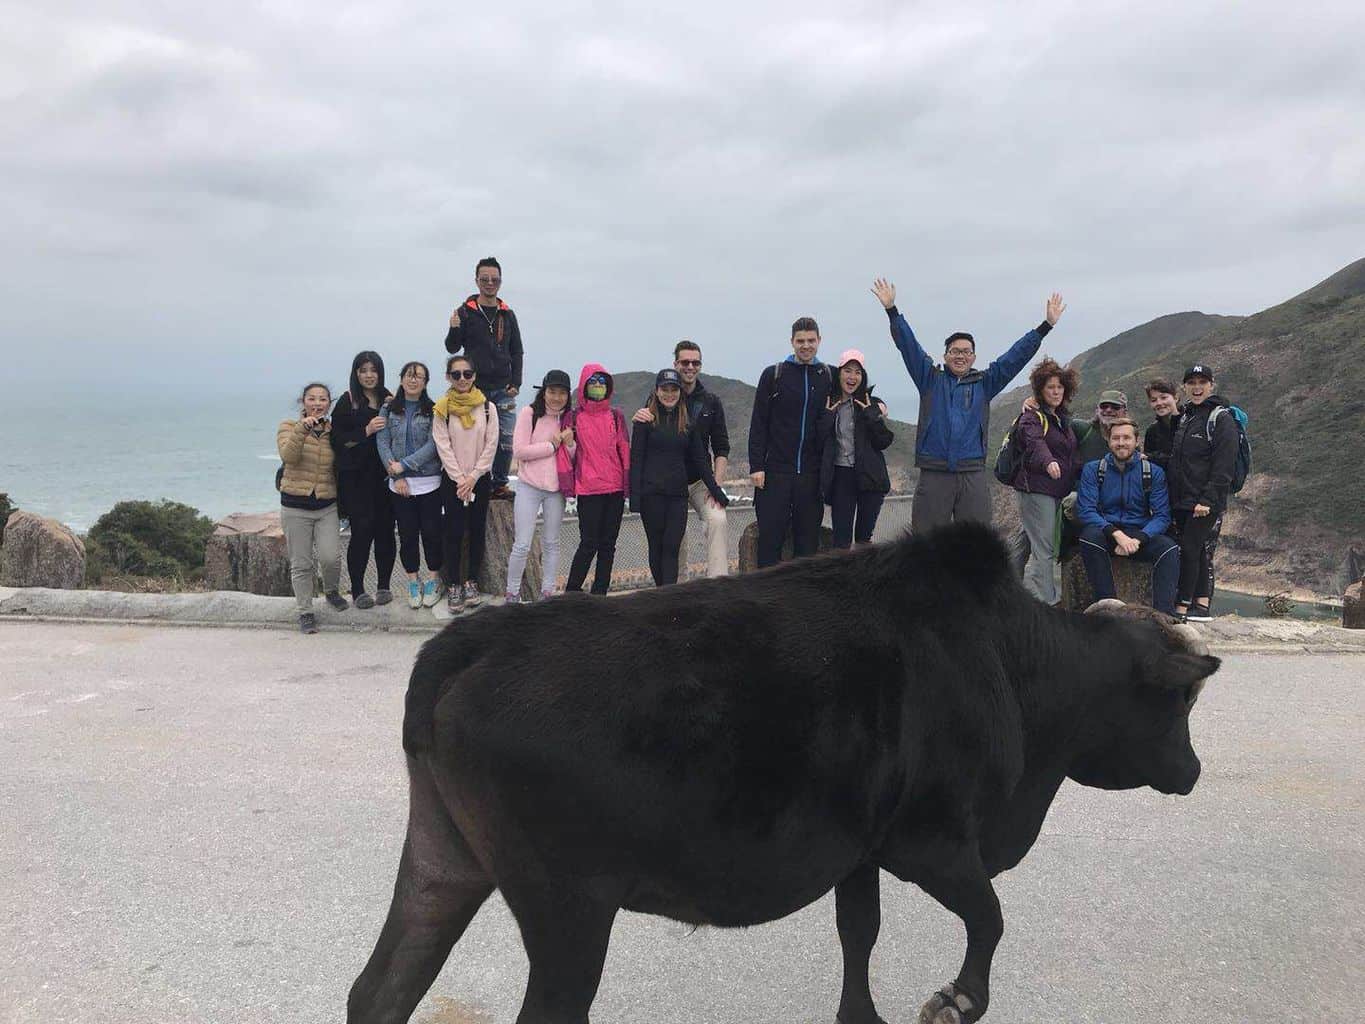 Cow on a group hike